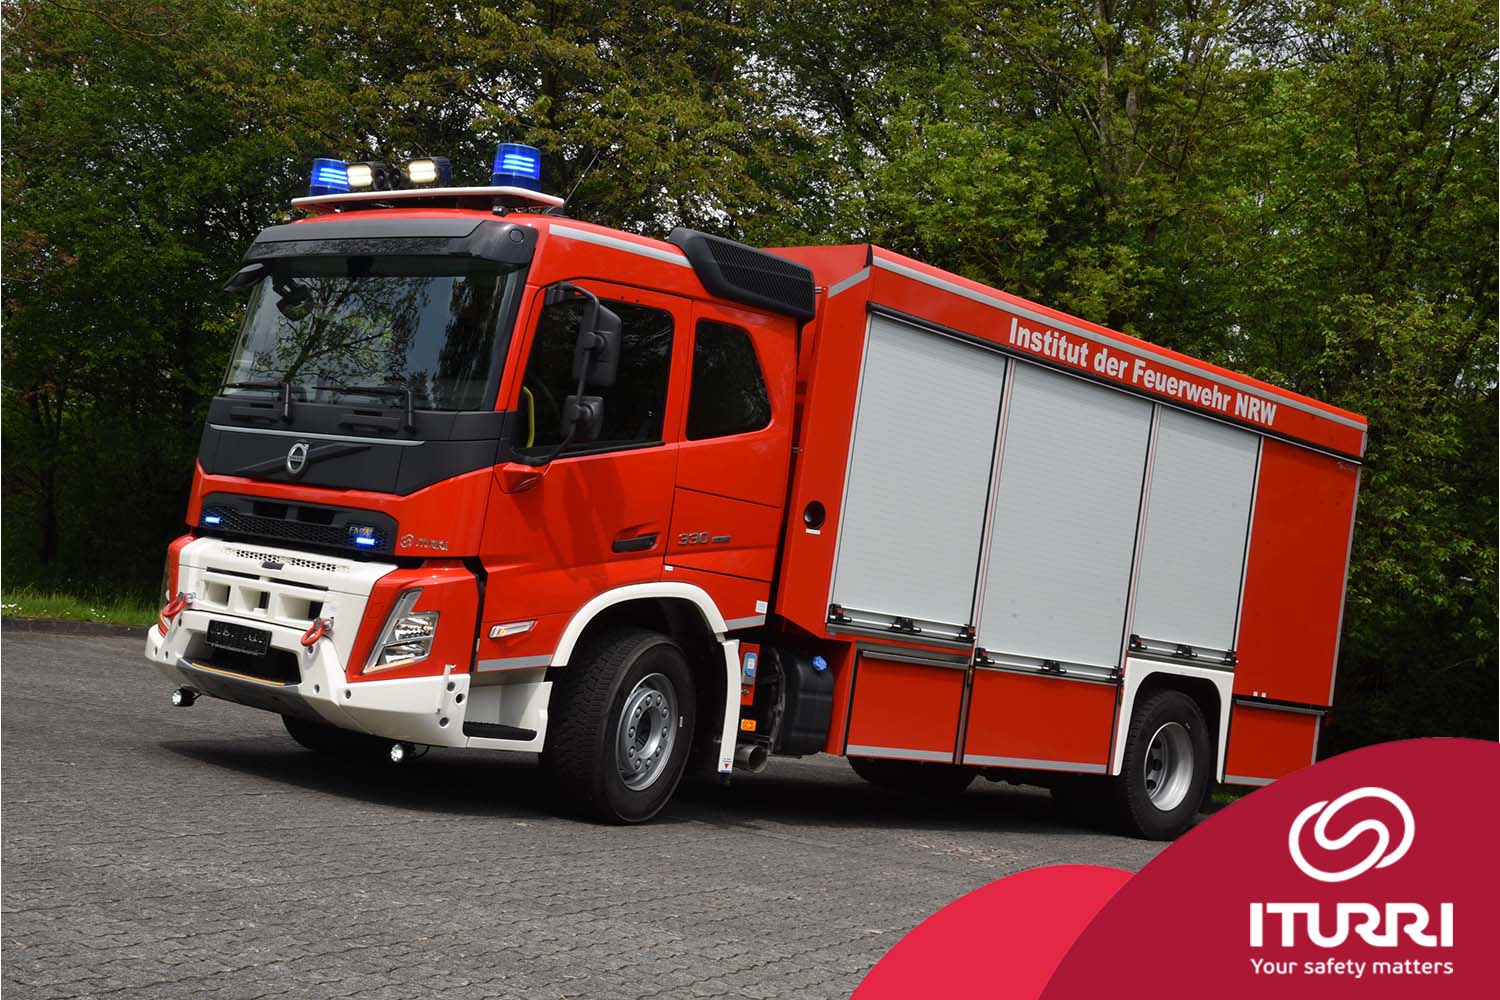 HazMat Truck - Institute of the fire brigade in North Rhine-Westphalia